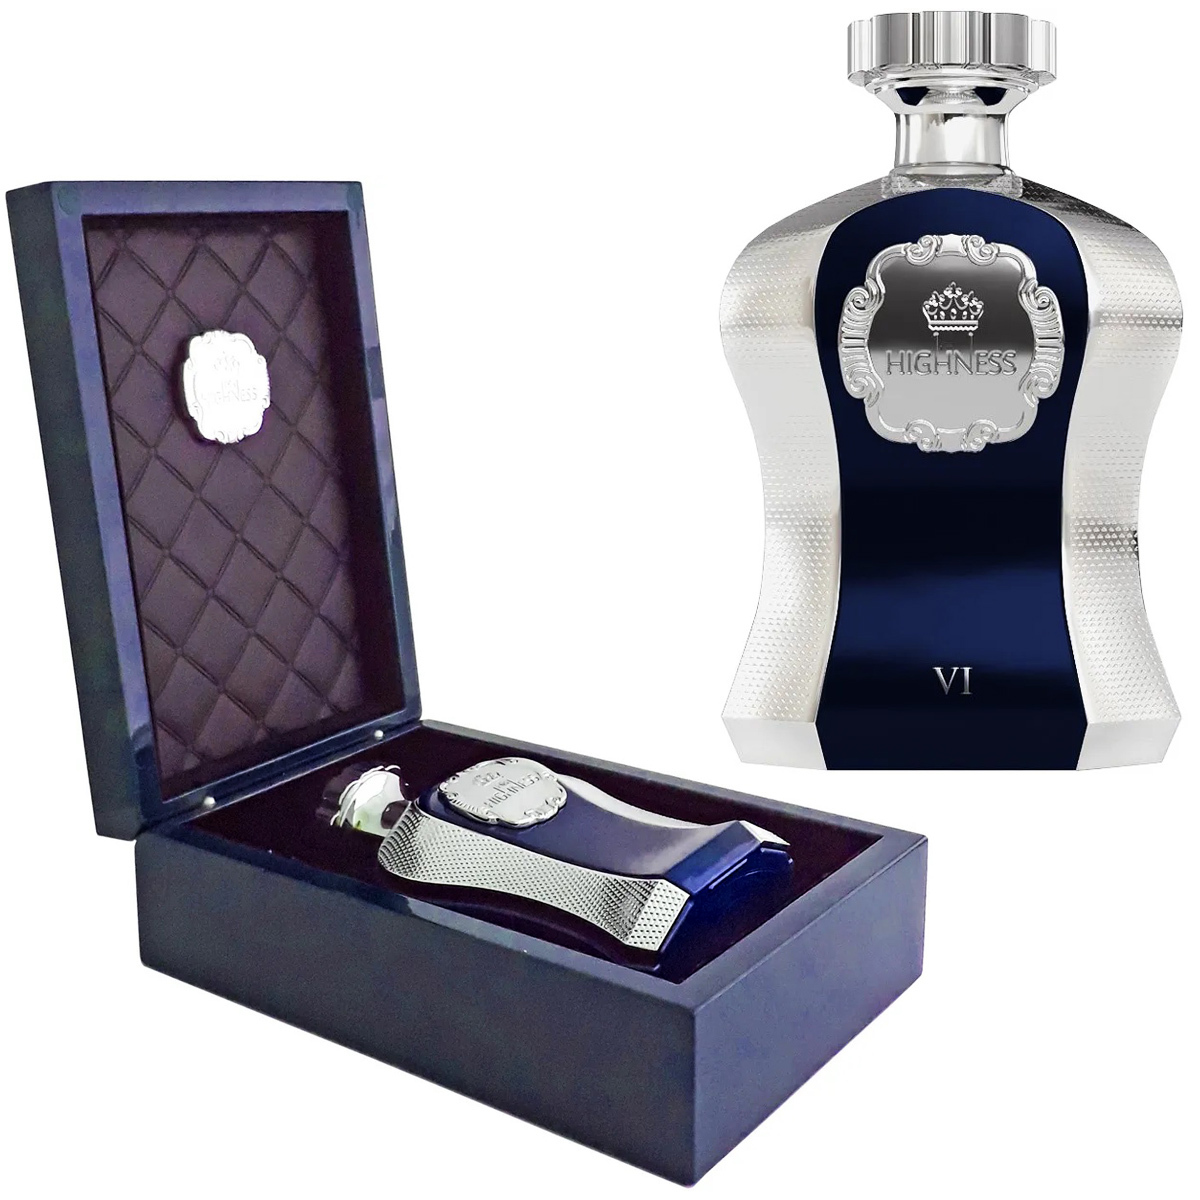 Парфюмерия Afnan Perfumes Highness VI - купить духи, парфюм, туалетную ...